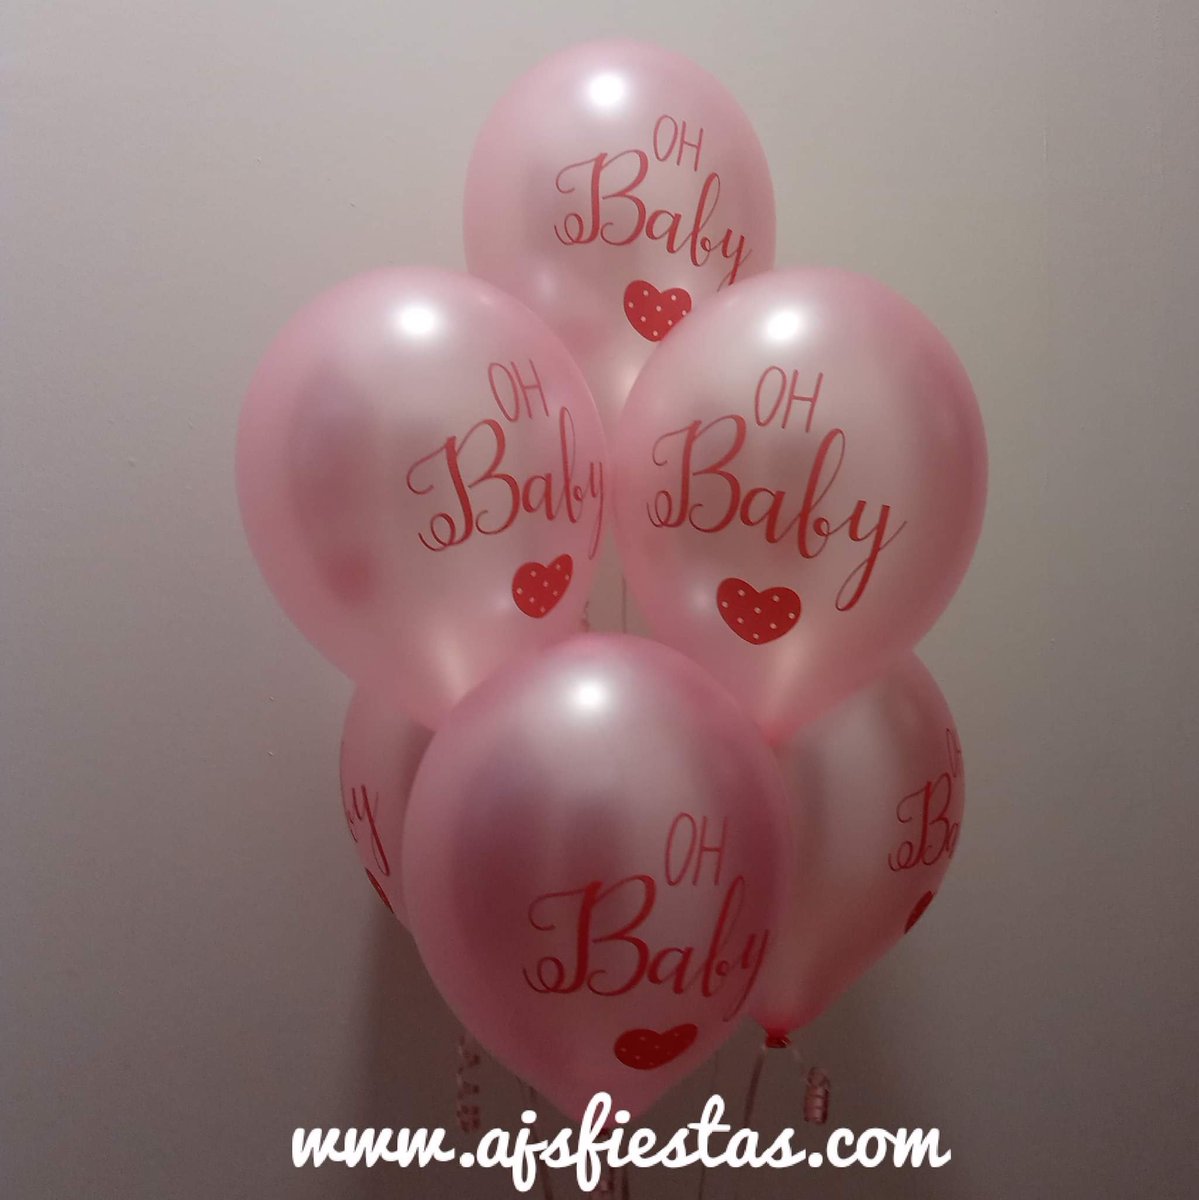 #babyshowerballoons
Order at ajsfiestas.com 
Or Via The AJs Fiestas App